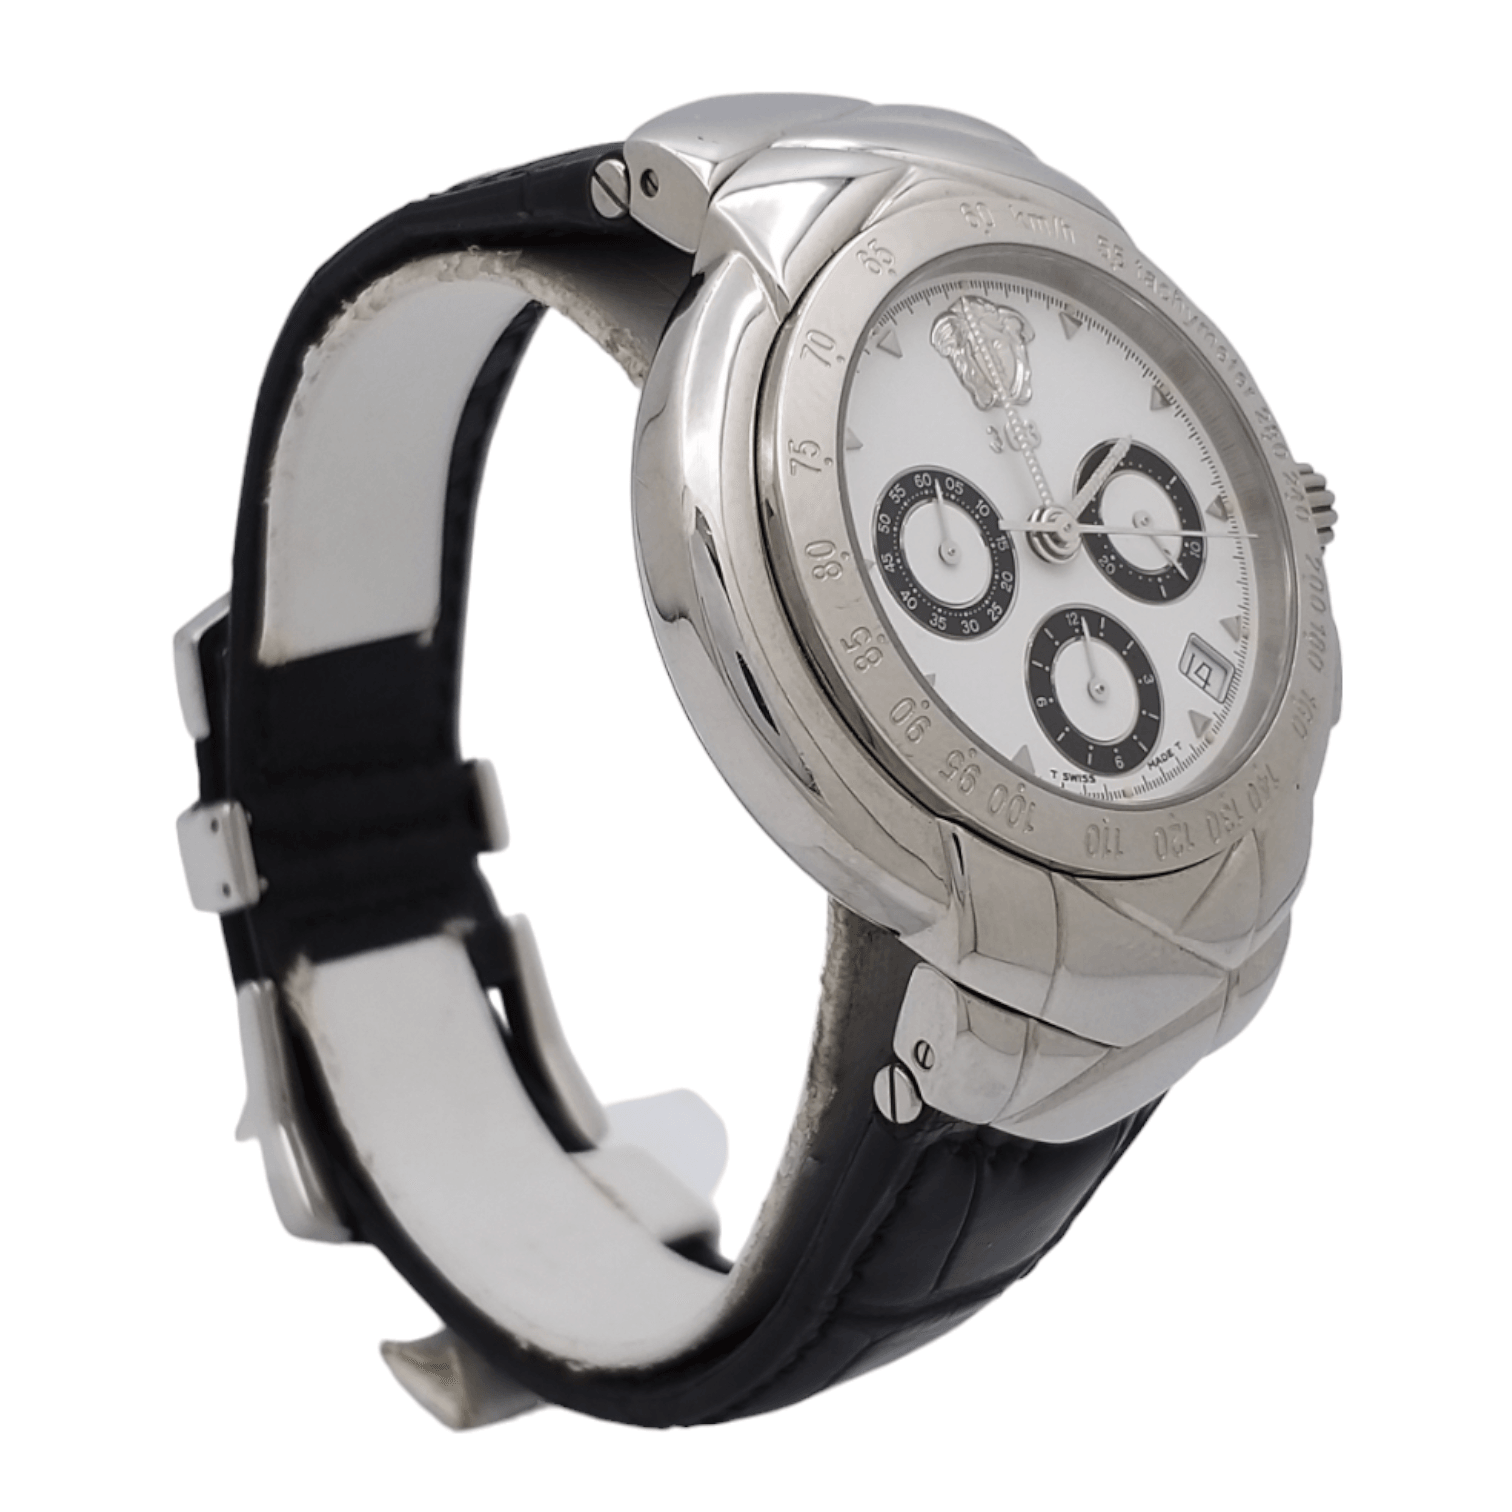 Gianni Versace Medusa 363 Automatic Chronograph Ref. 001-2500 - ON839 - LuxuryInStock